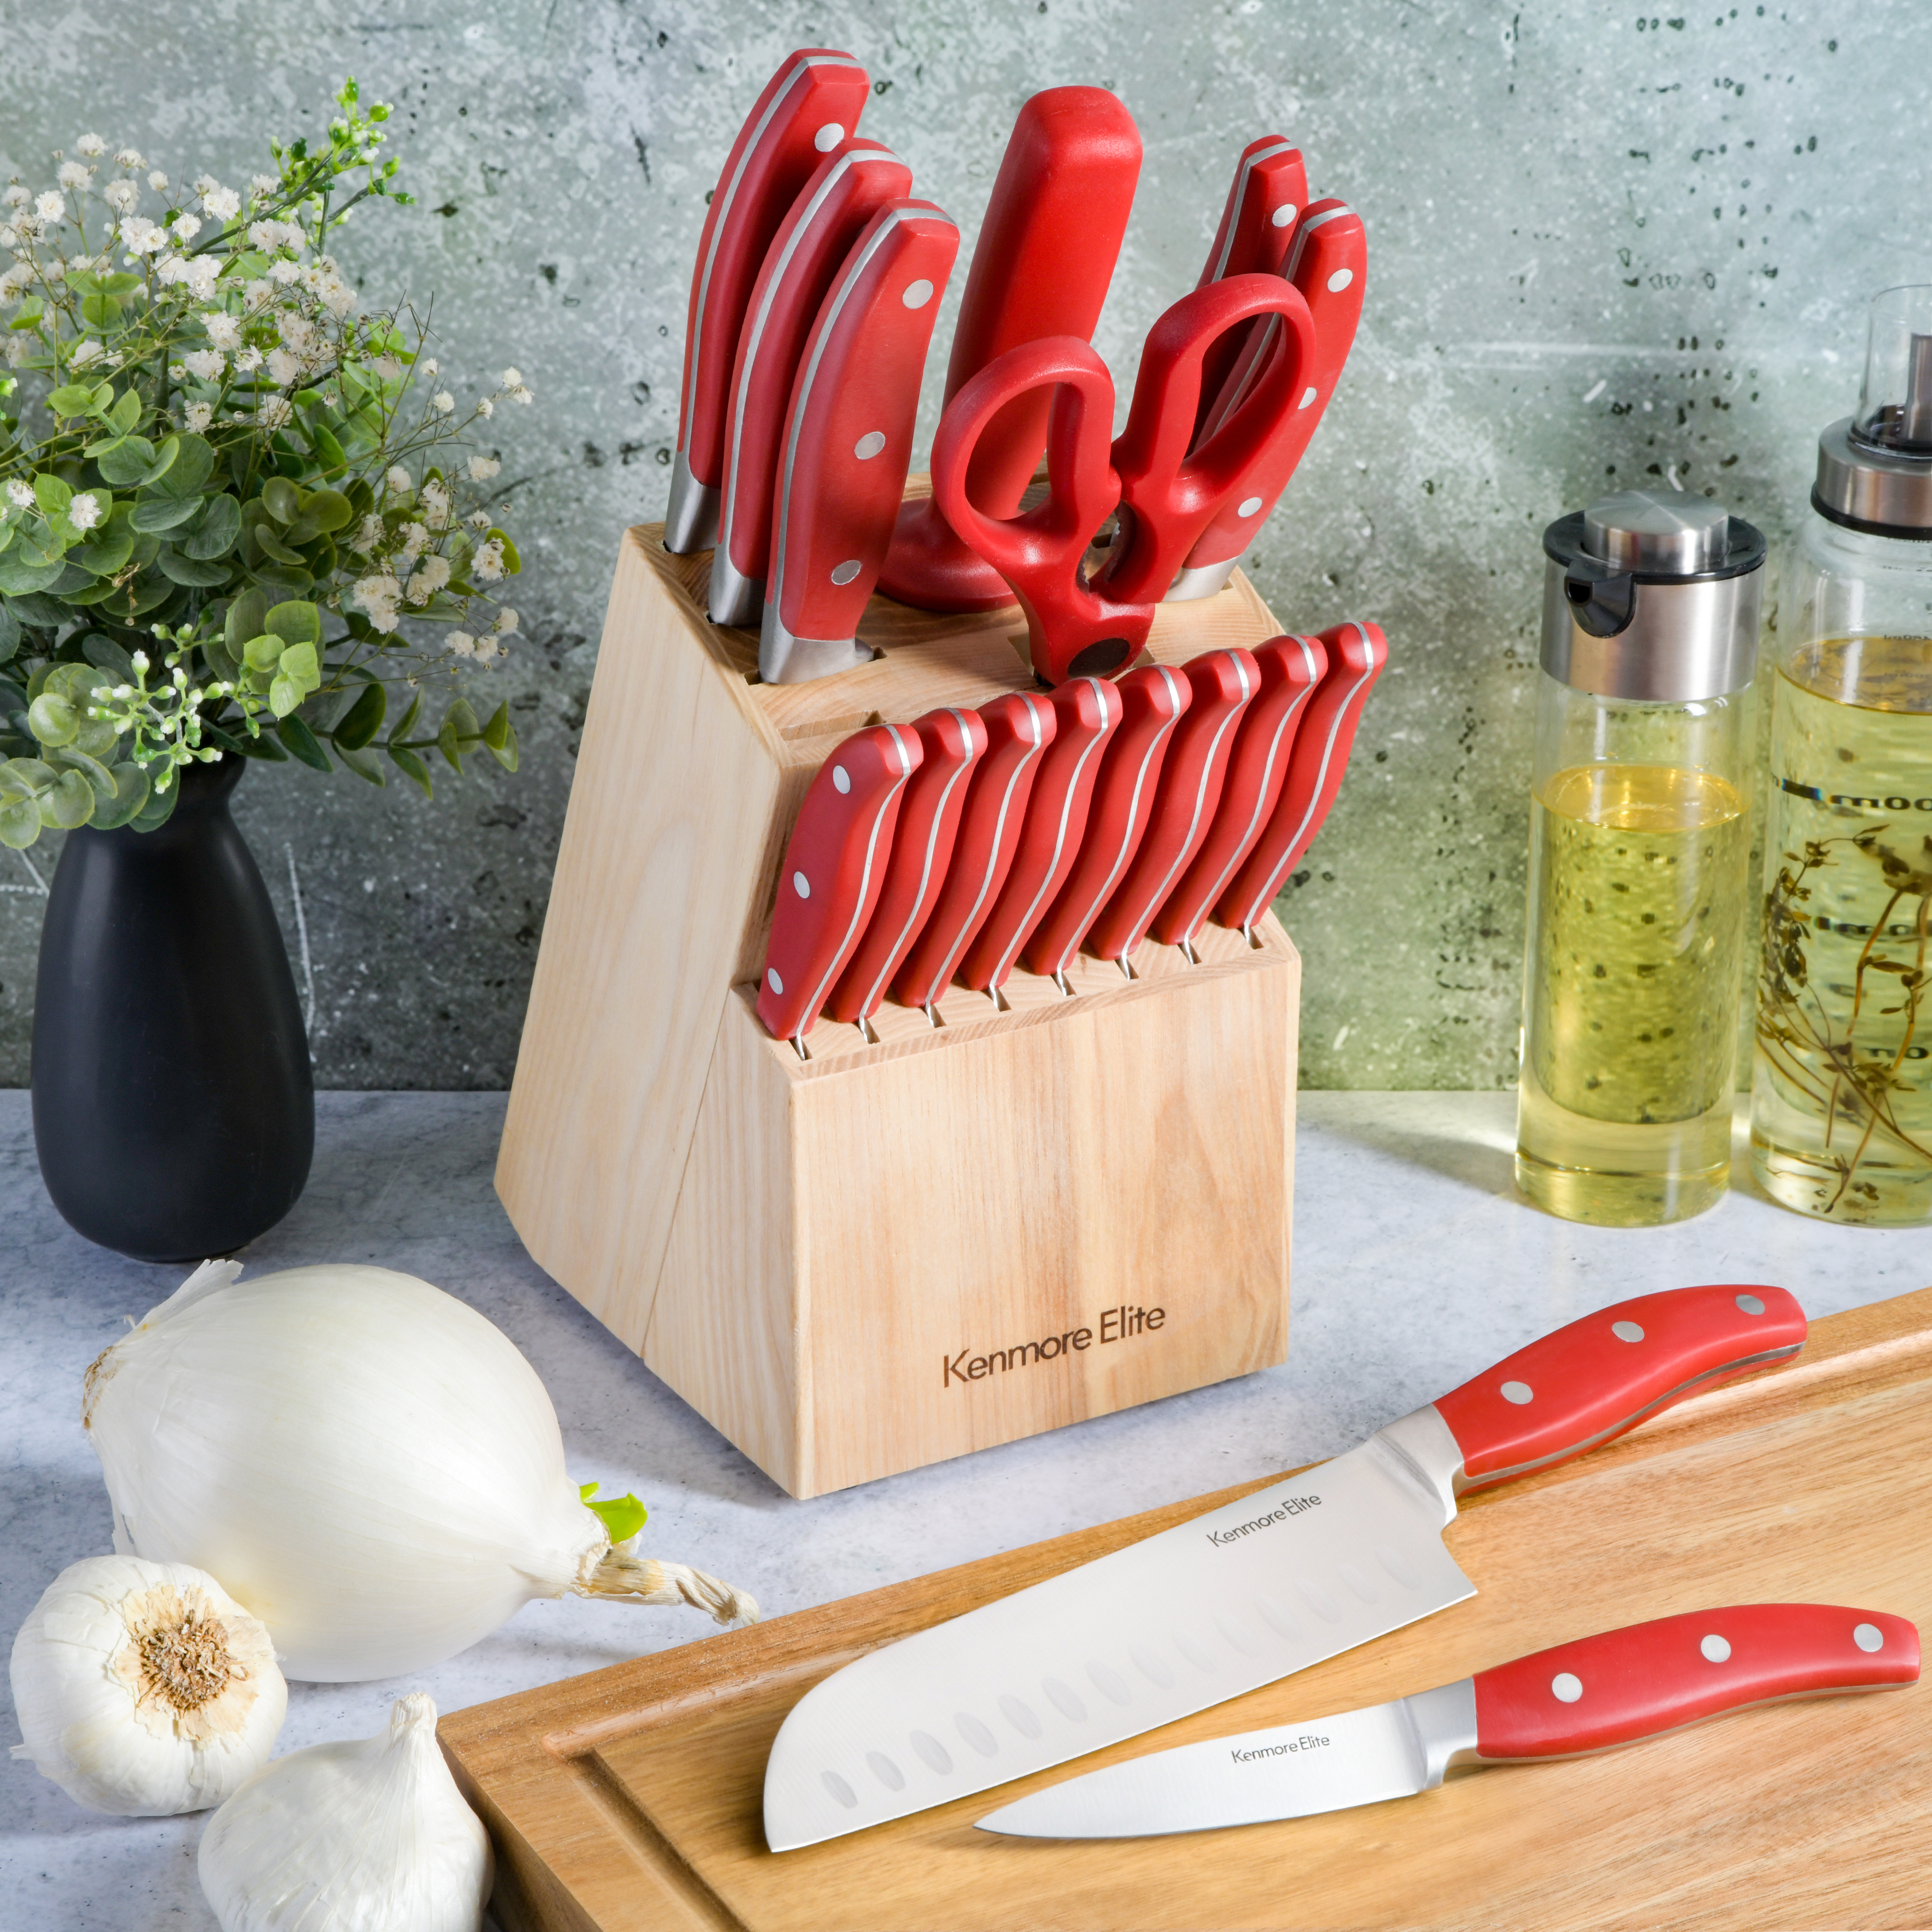 Kenmore Elite Lucas Forged Stainless Steel Kitchen Cutlery Knife Block Set, 18-Piece, Red/Ashwood (Block)